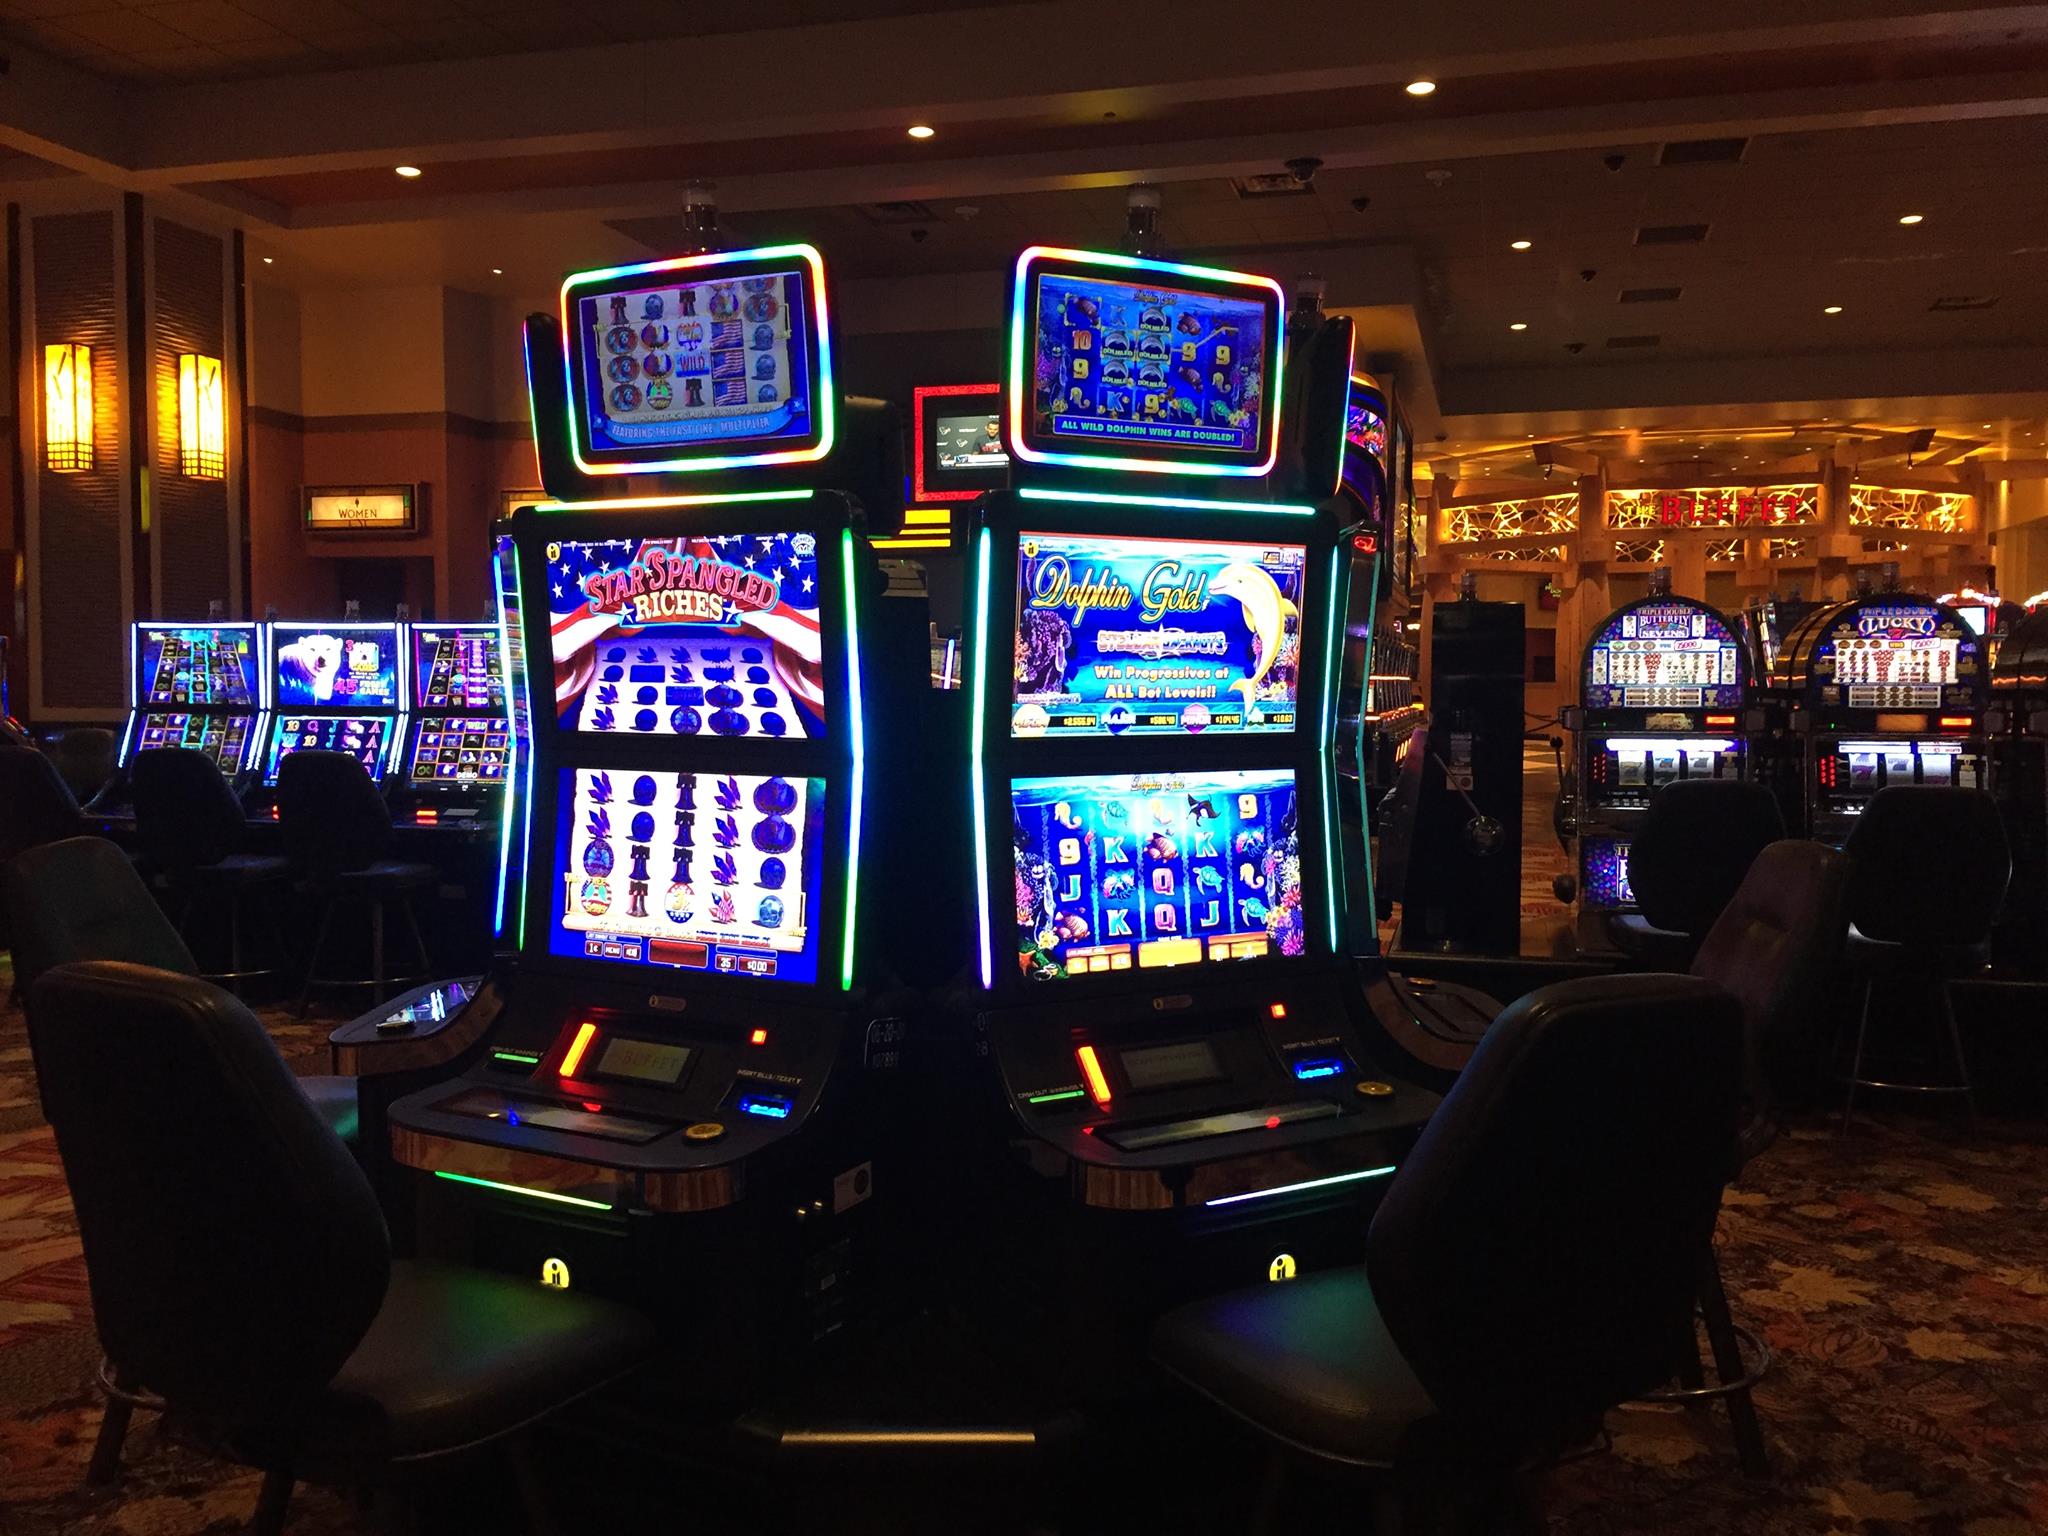 Foxwoods casino online slots